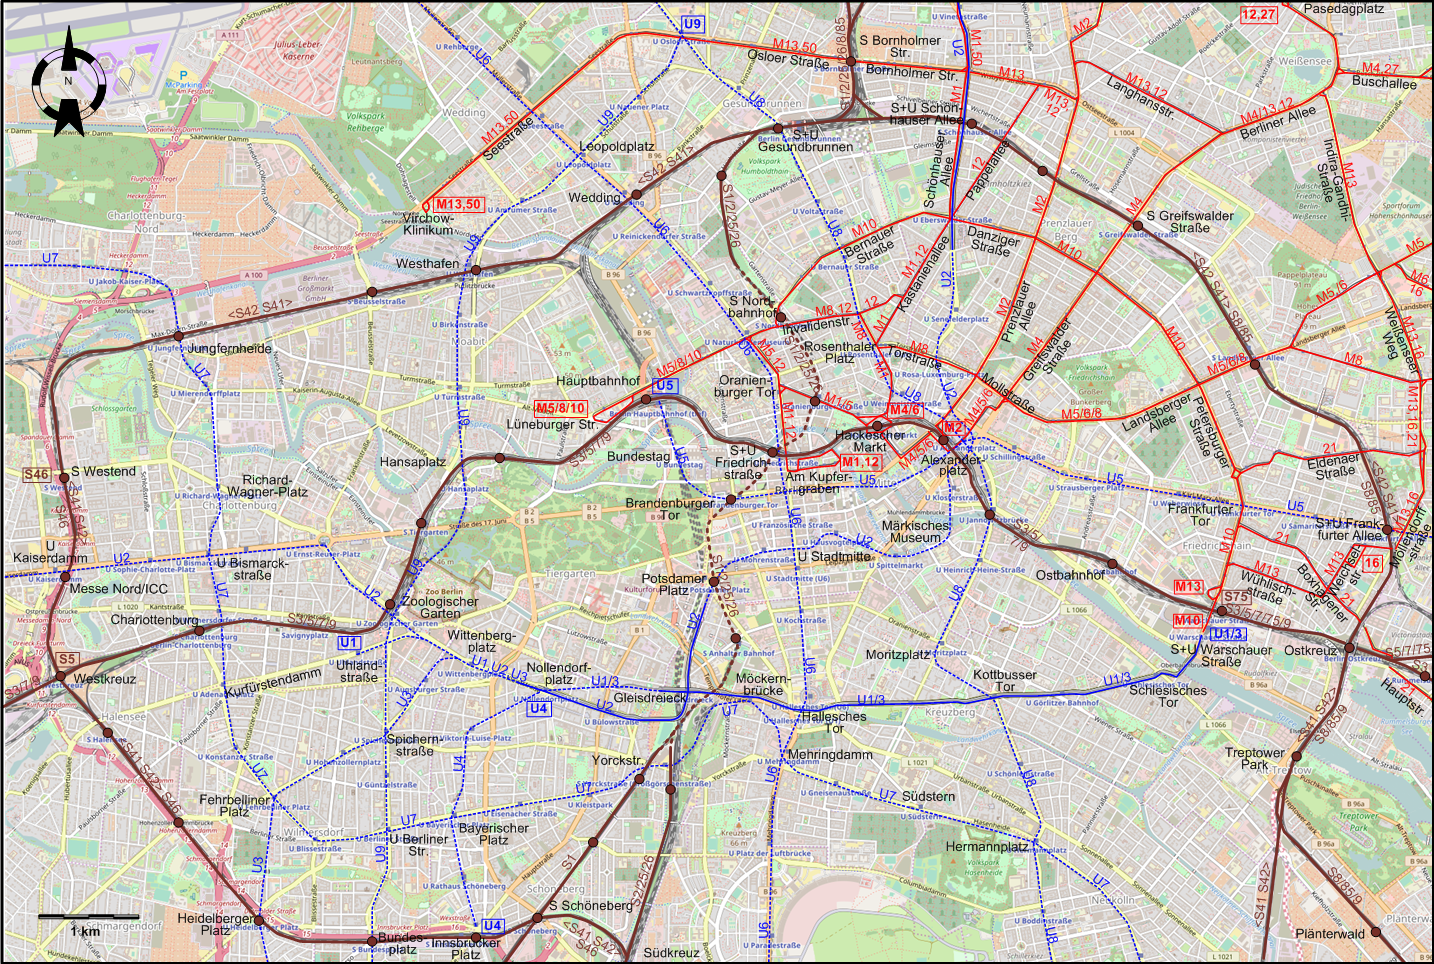 Berlin 2021 central tram map